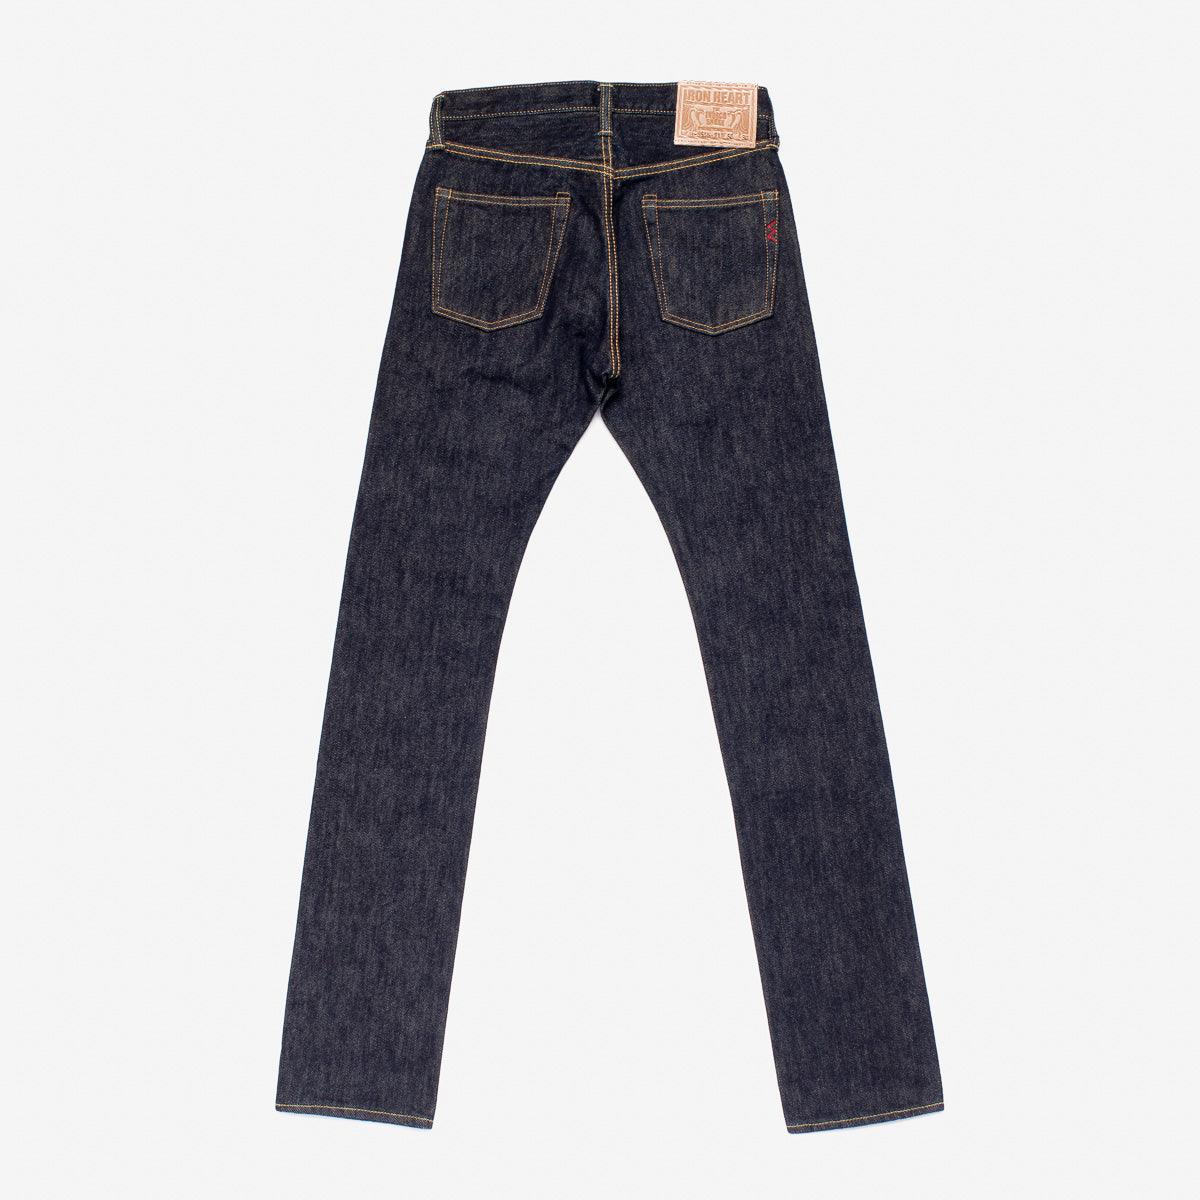 IH-555S-21 - 21oz Selvedge Denim Super Slim Jeans Indigo